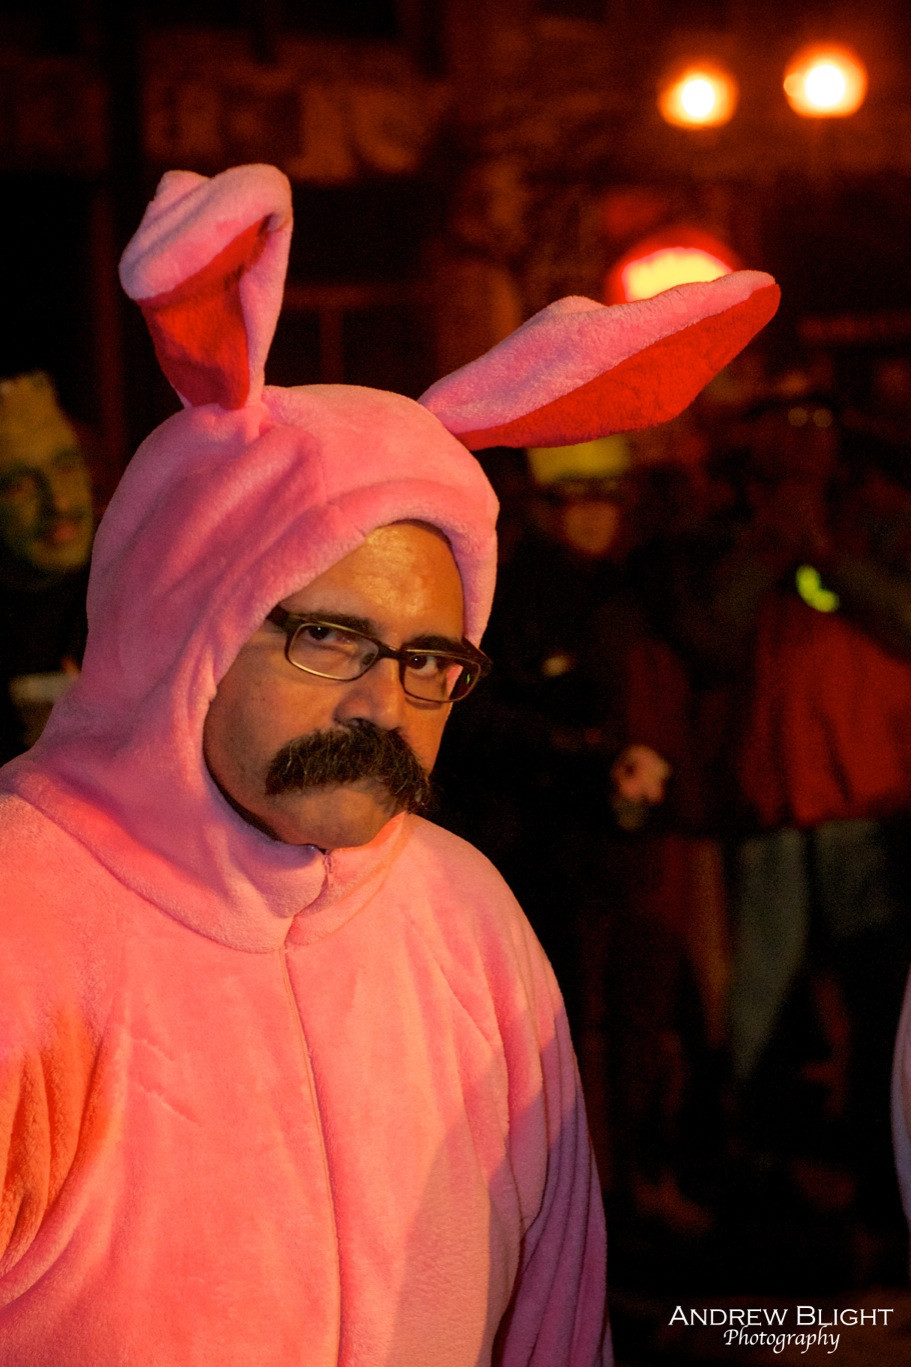 A Christmas Story pink bunny costume